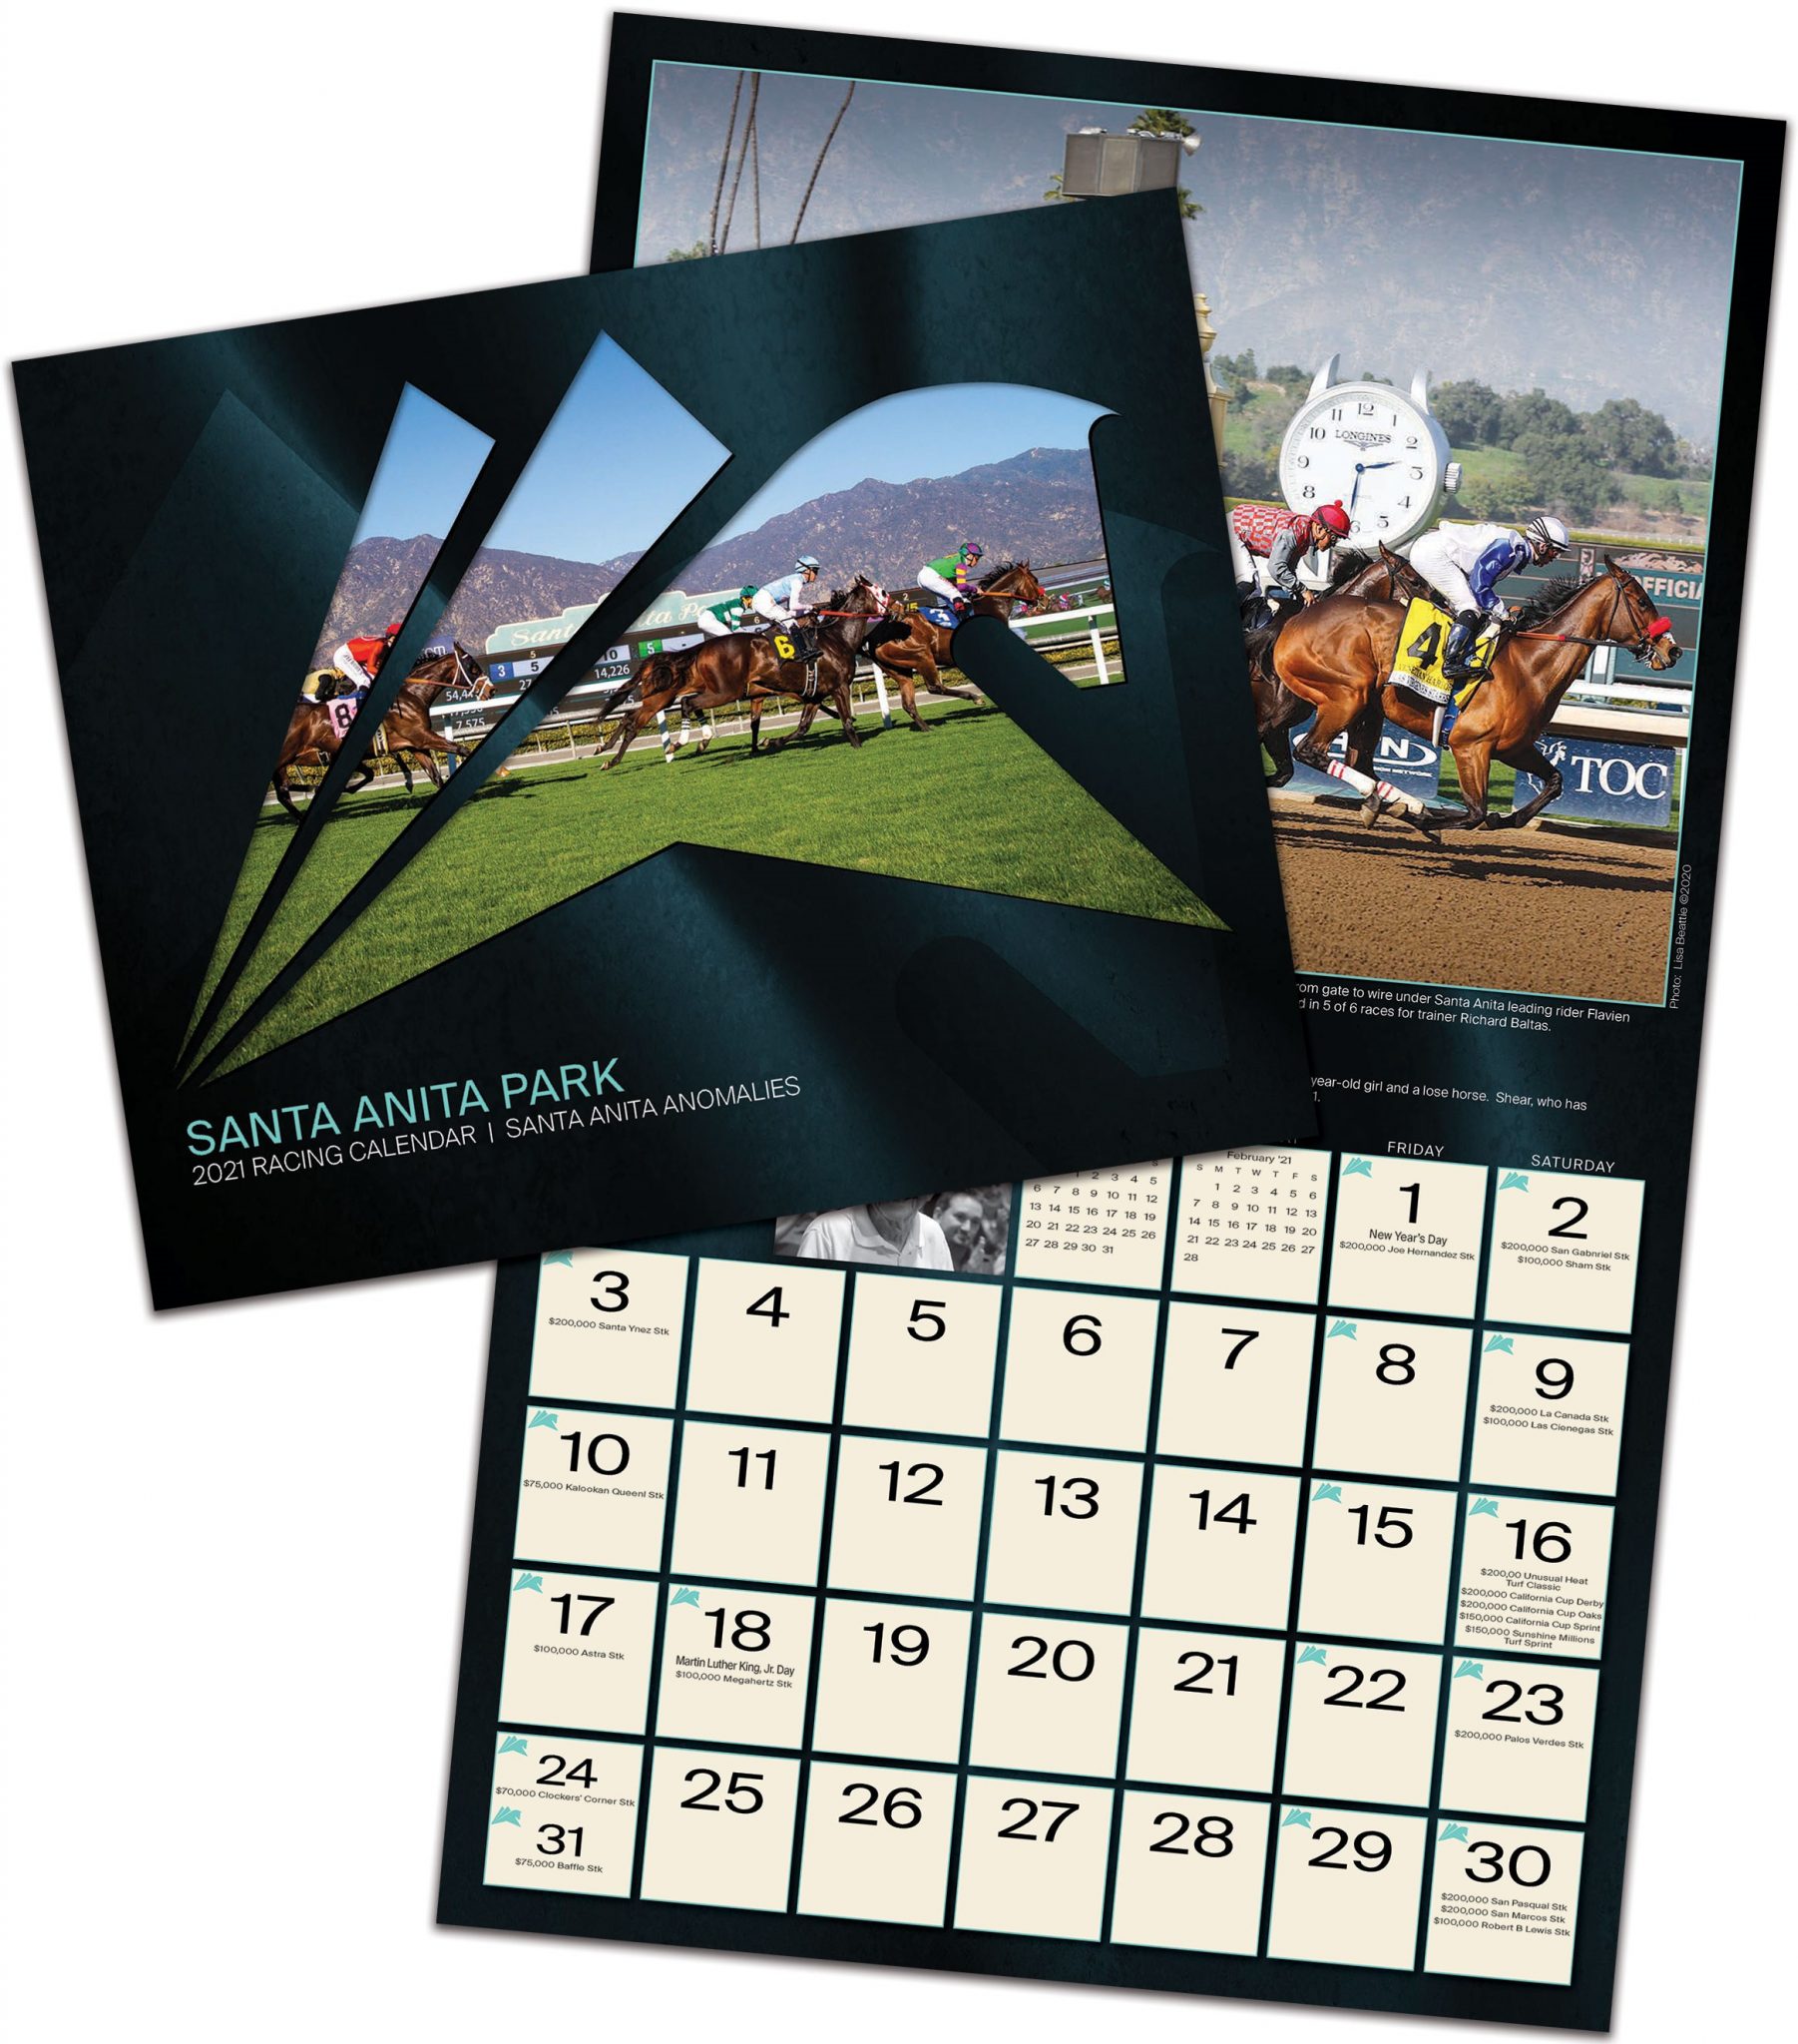 2021-santa-anita-calendars-to-benefit-retired-racehorses-carma